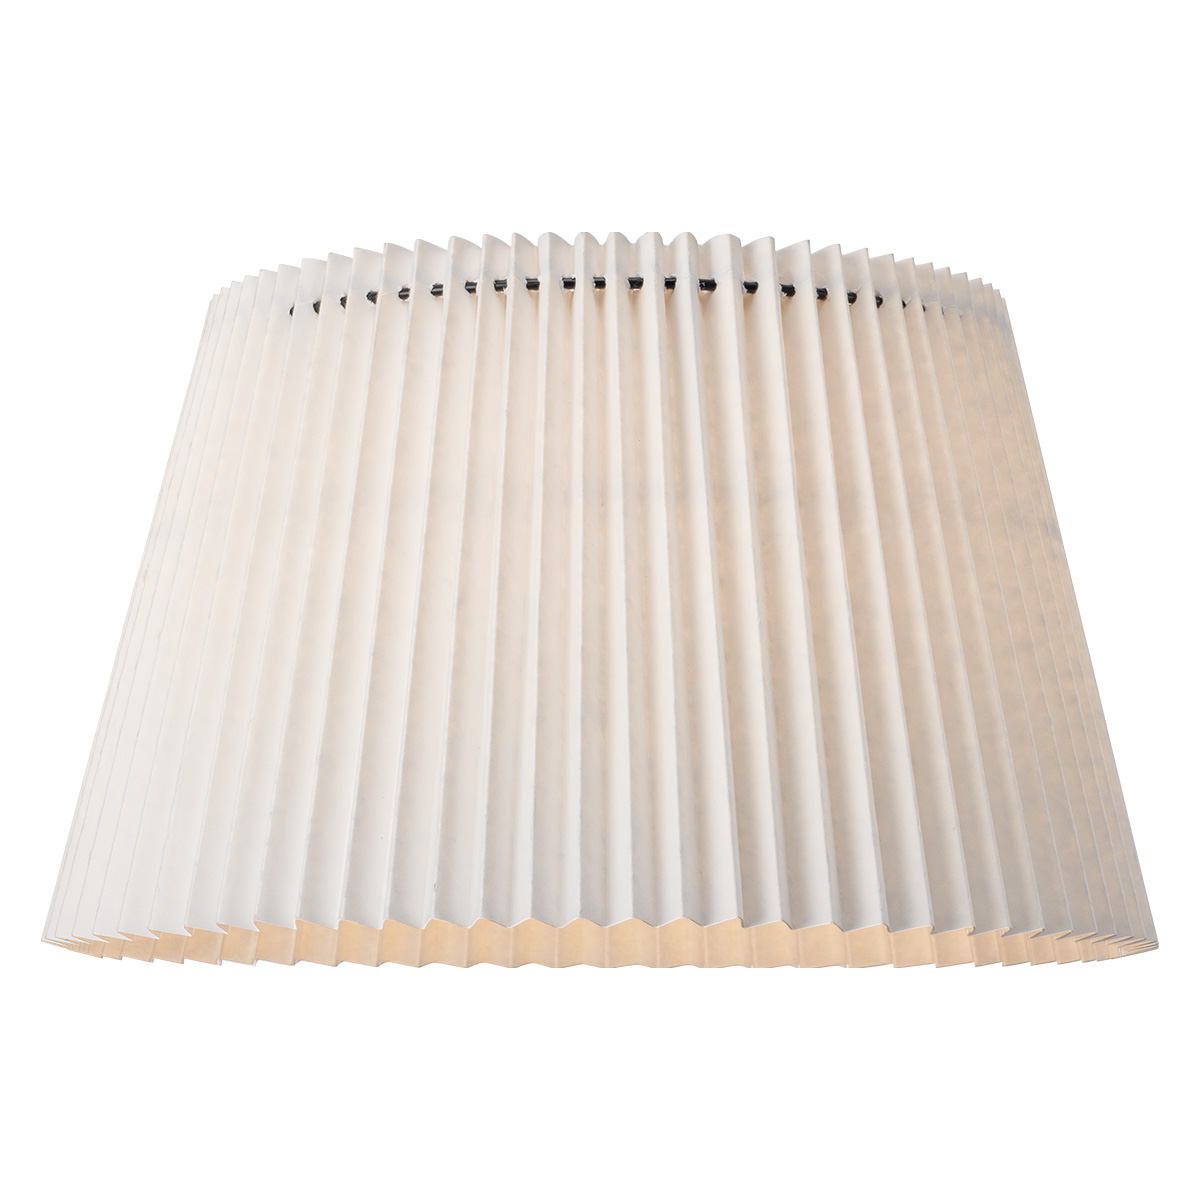 Tangla Lighting - Lampshade - metal and paper - white - taper - diameter 40cm - E27